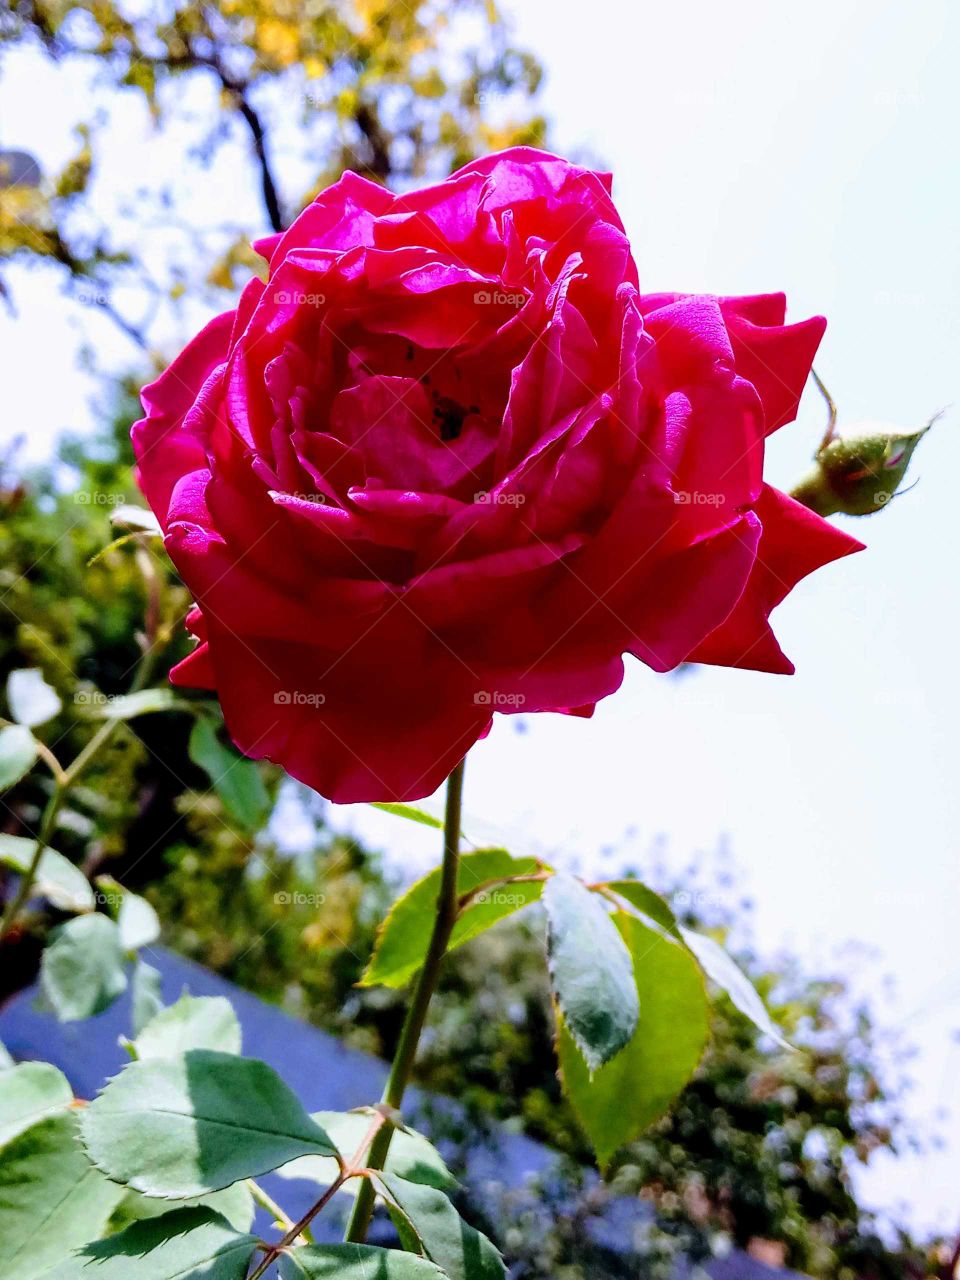 Rose love.